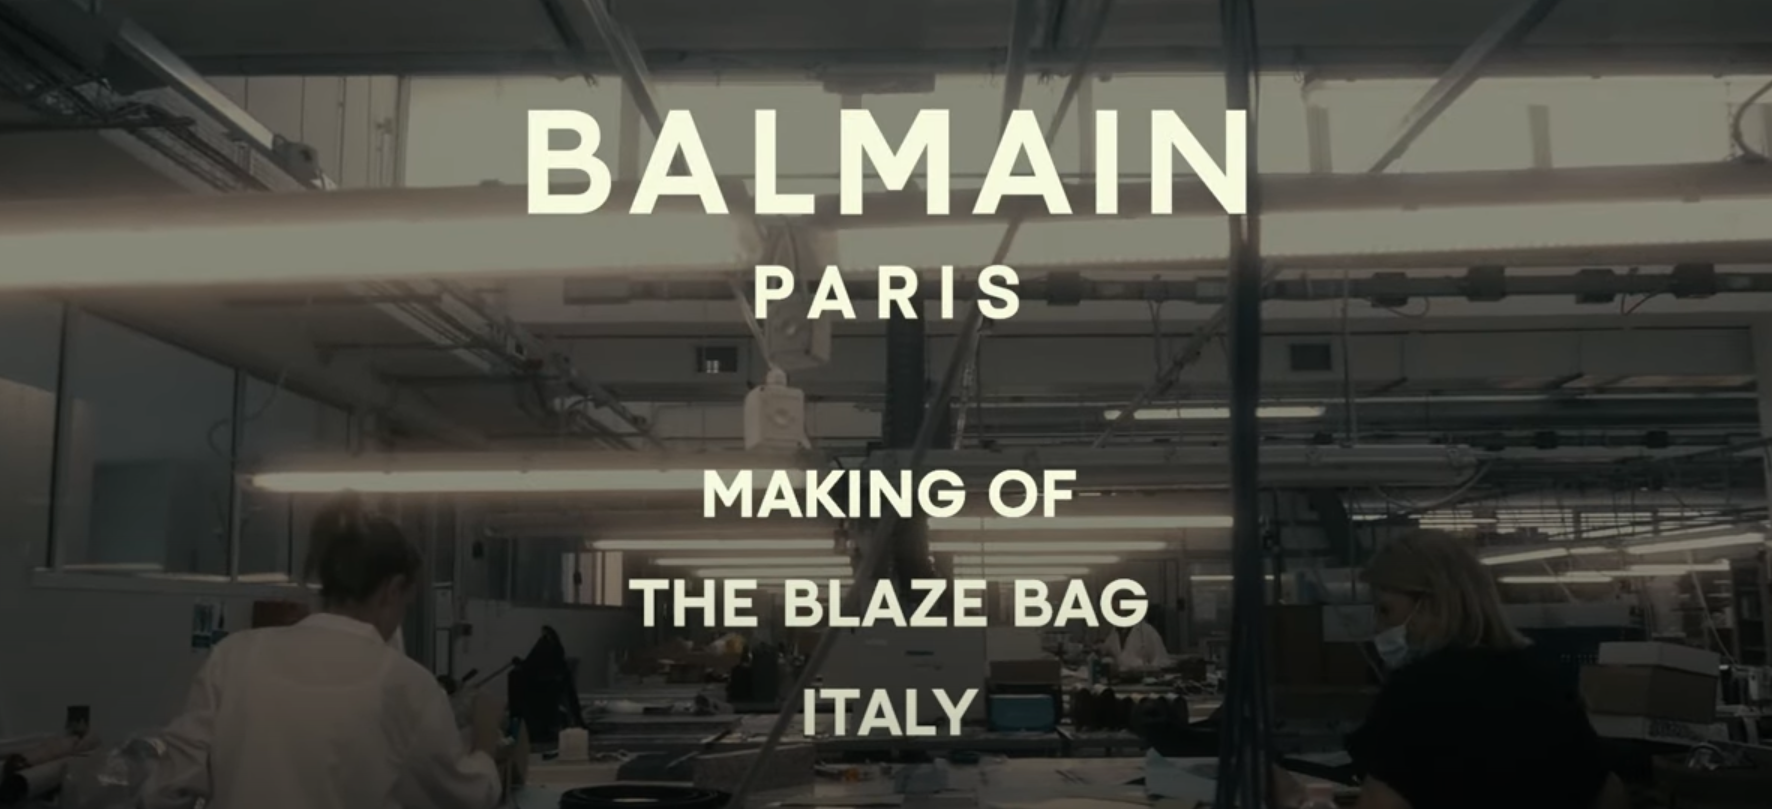 Balmain Blaze Bag - Making Of In Italy